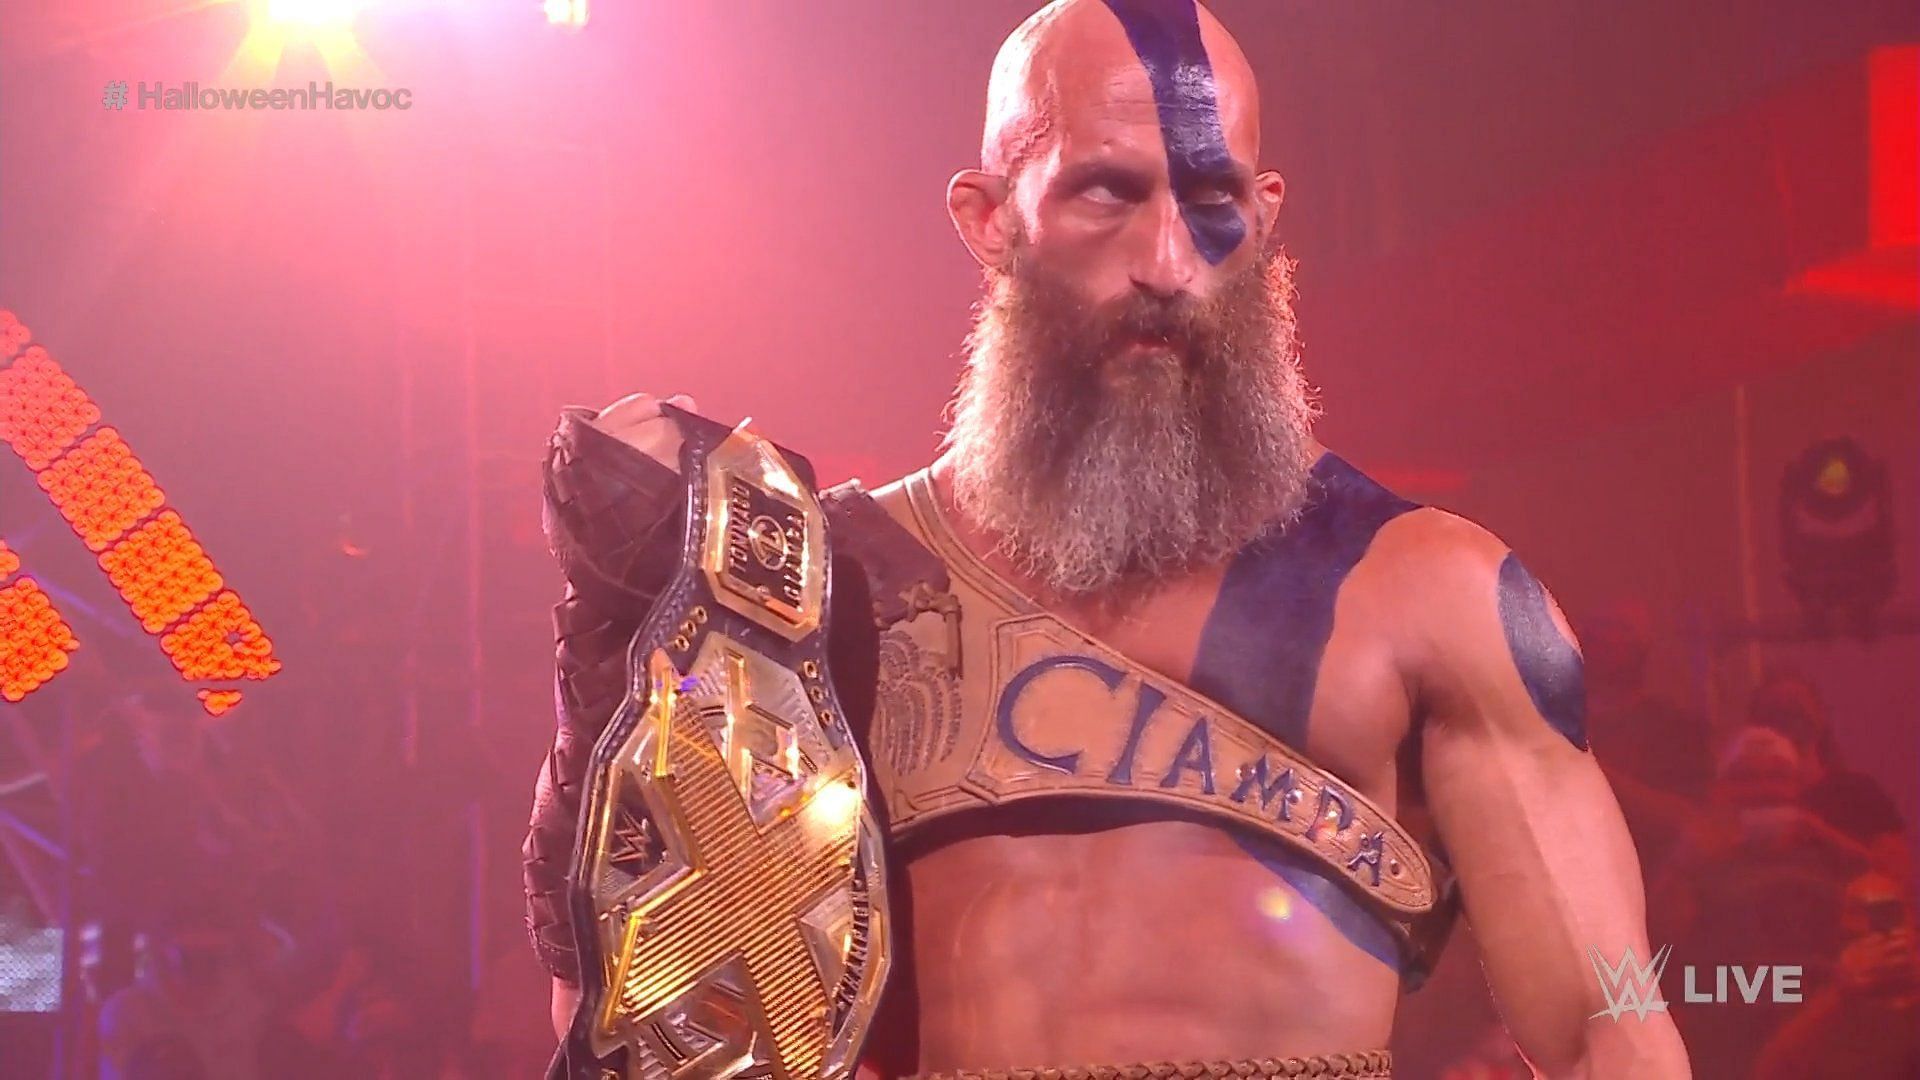 The God of War made it through WWE NXT Halloween Havoc